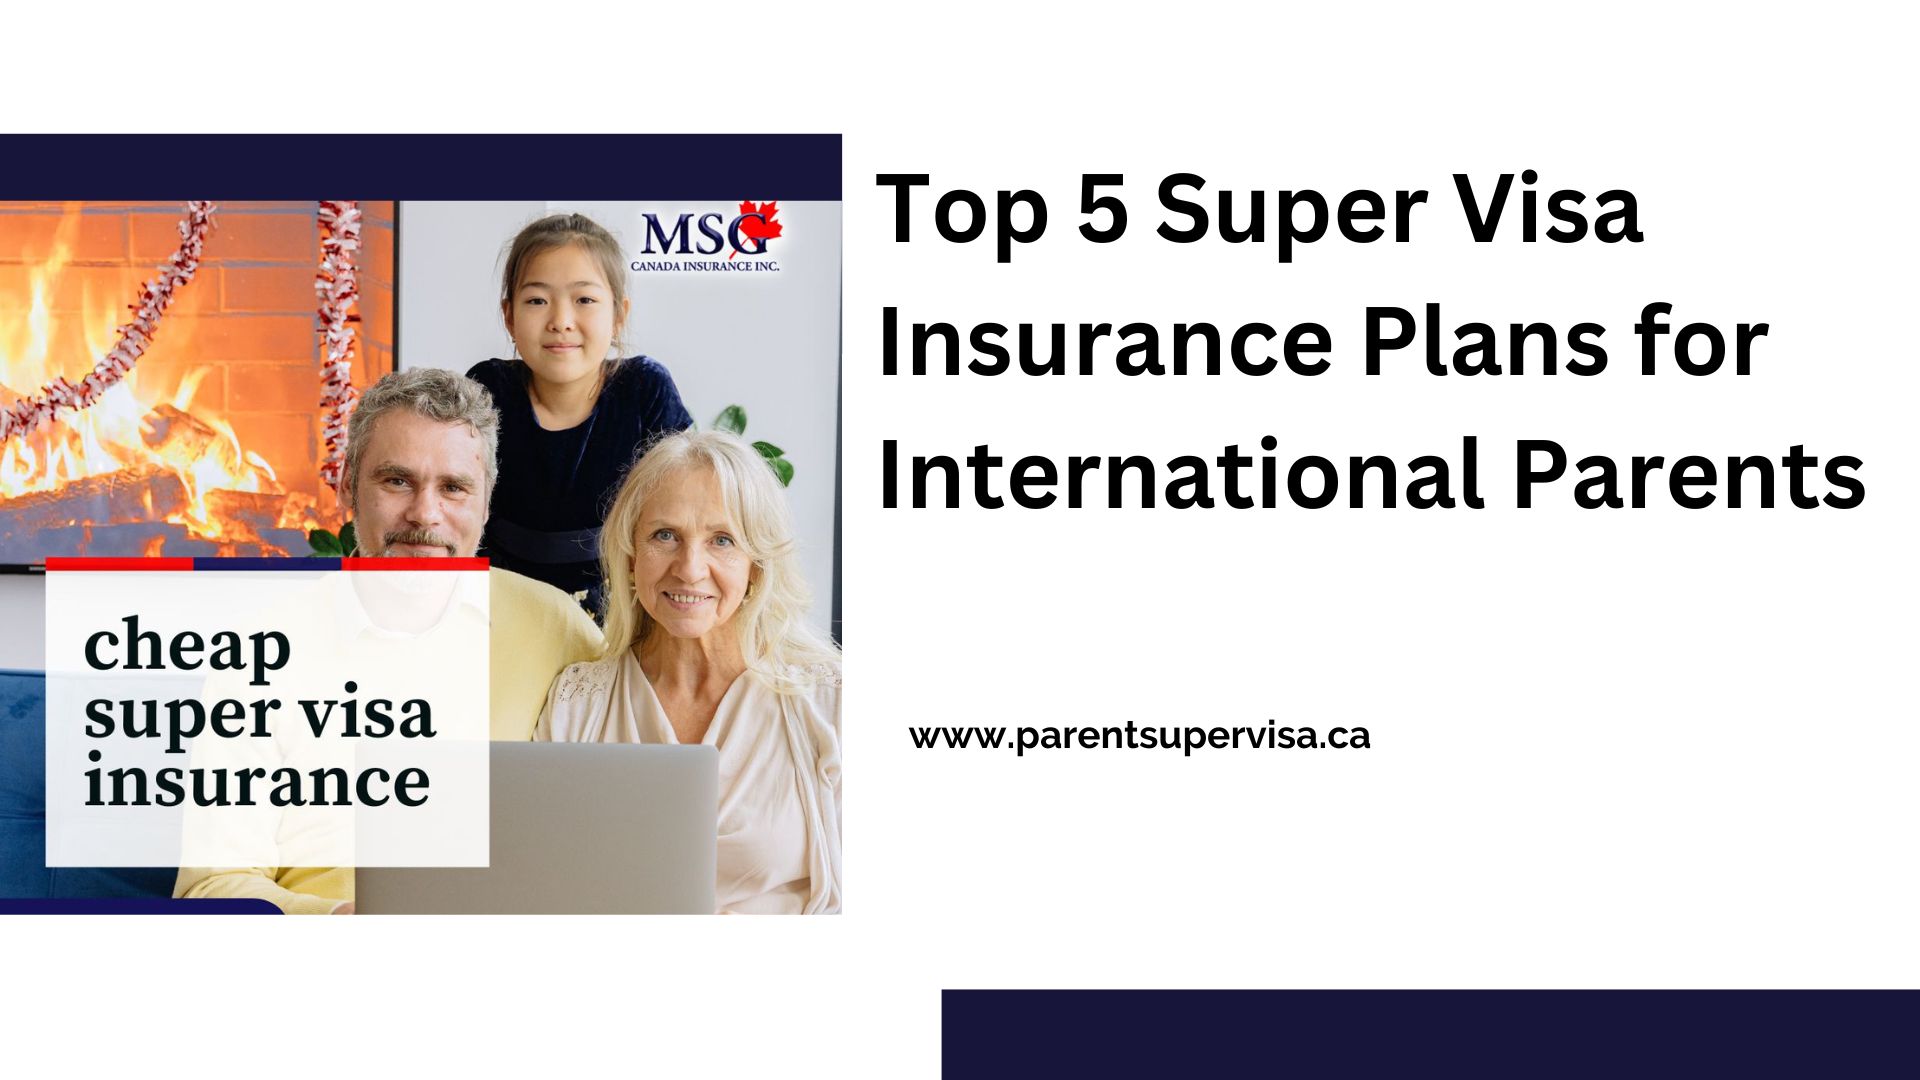 Top 5 Super Visa Insurance Plans for International Parents